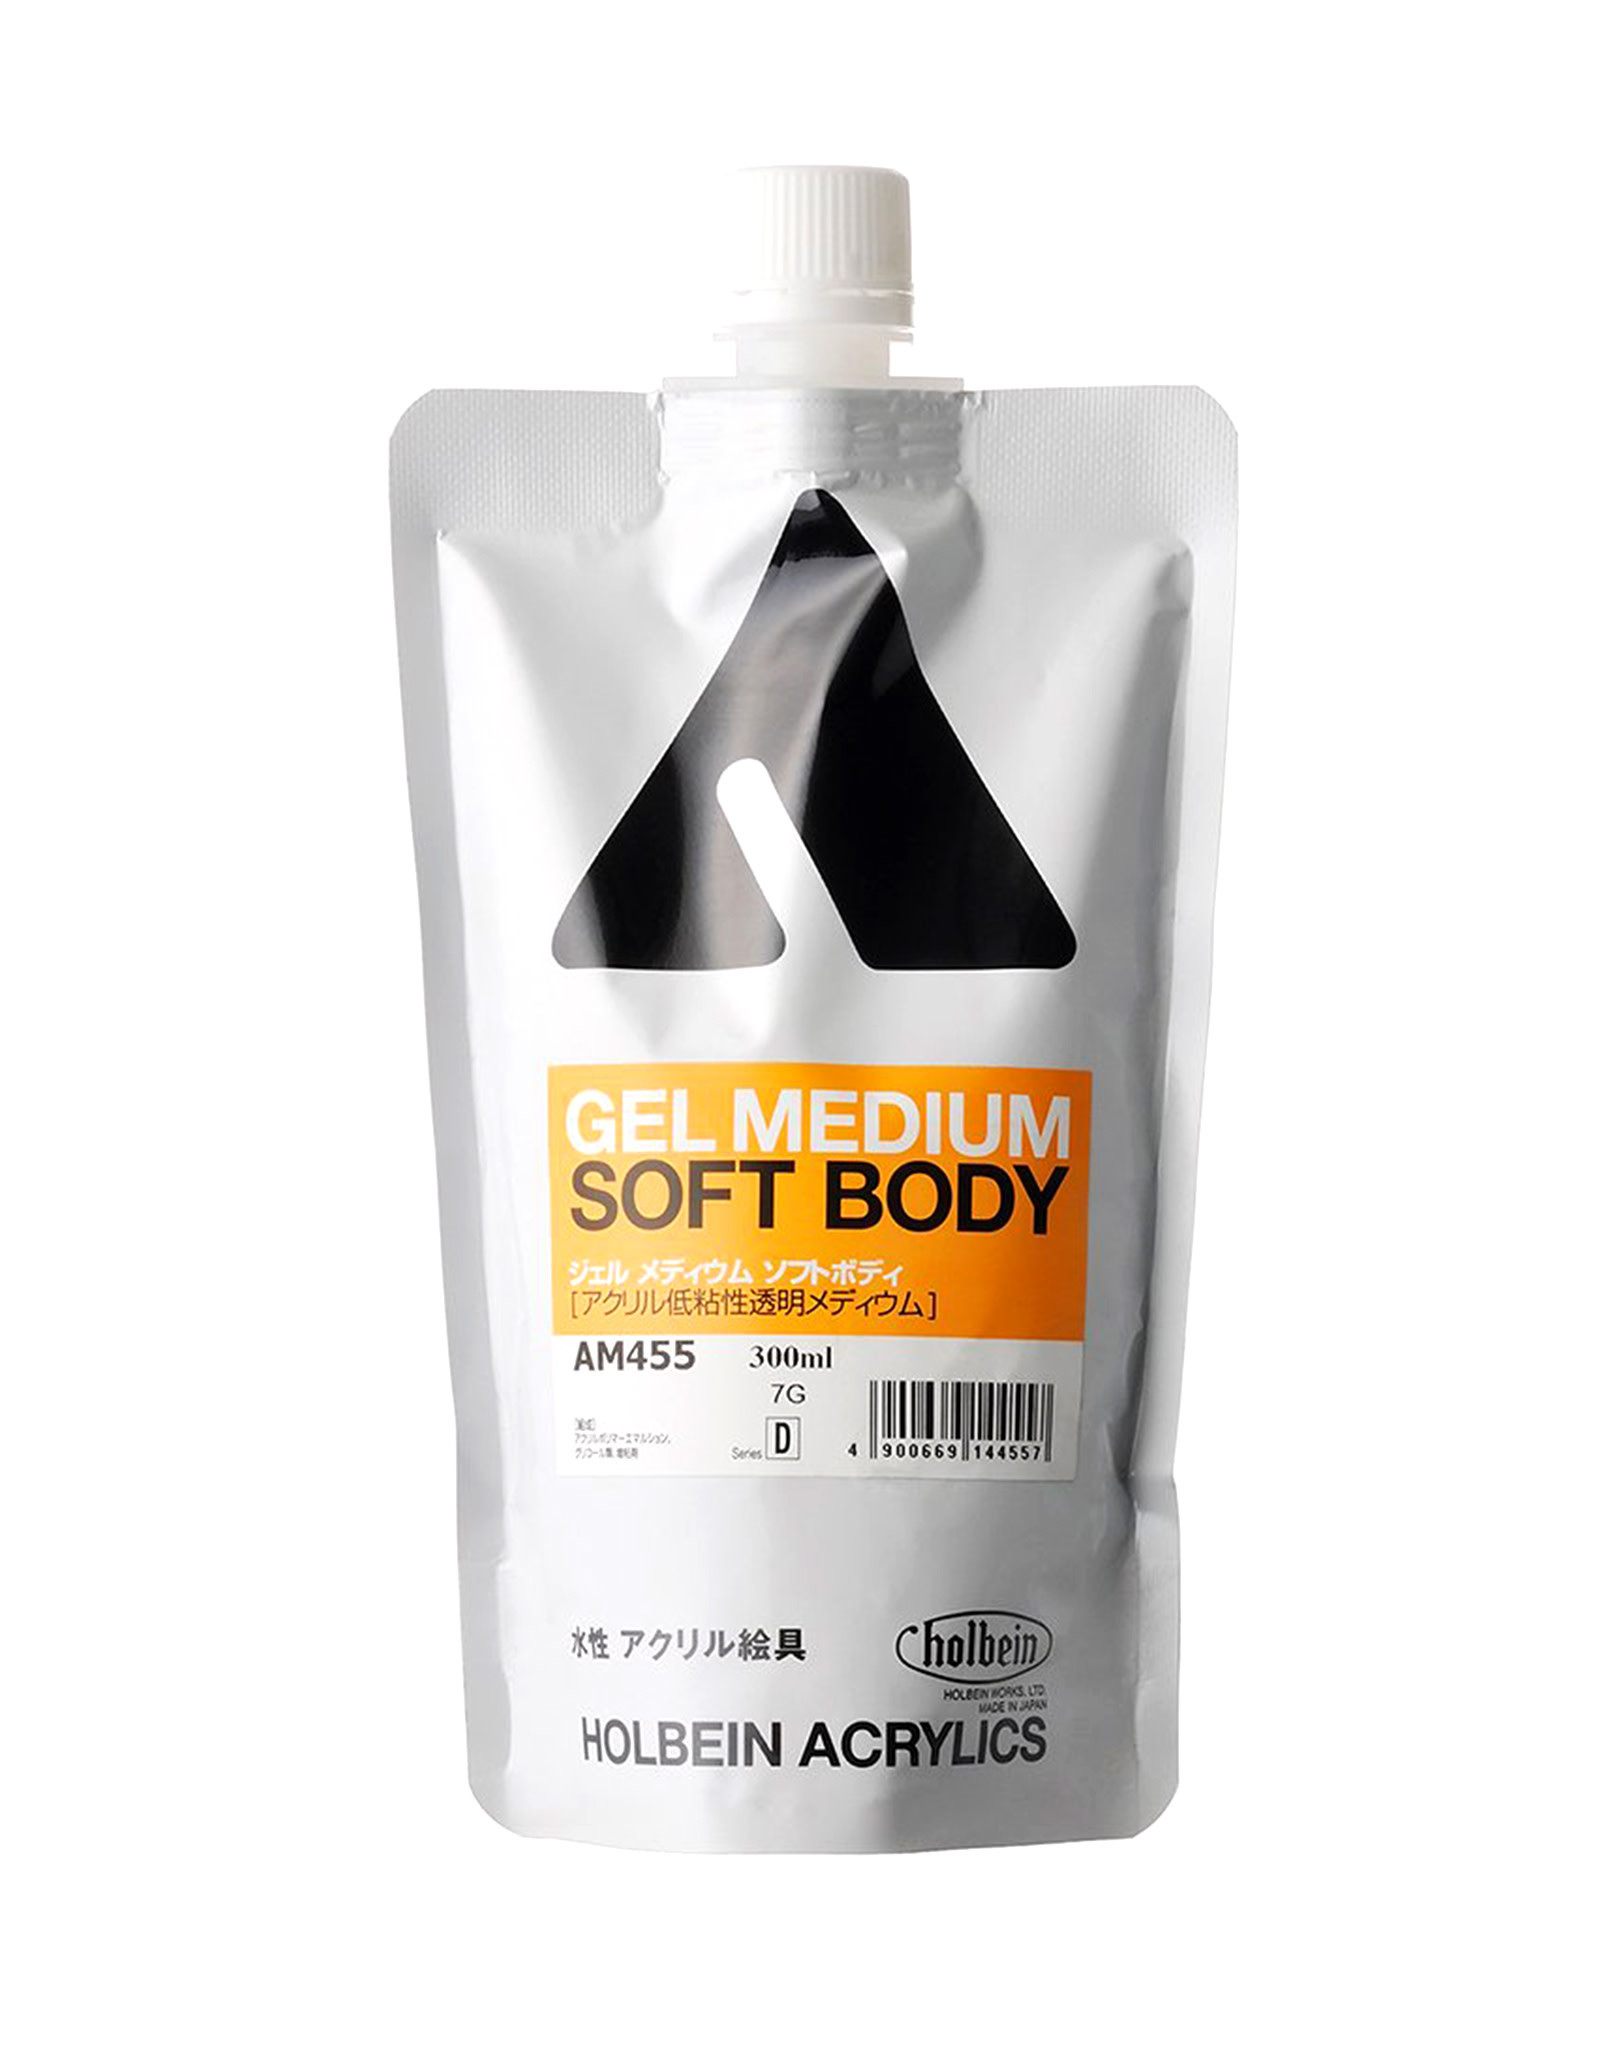 Holbein Gel Medium, Soft Body 300ml - The Art Store/Commercial Art Supply